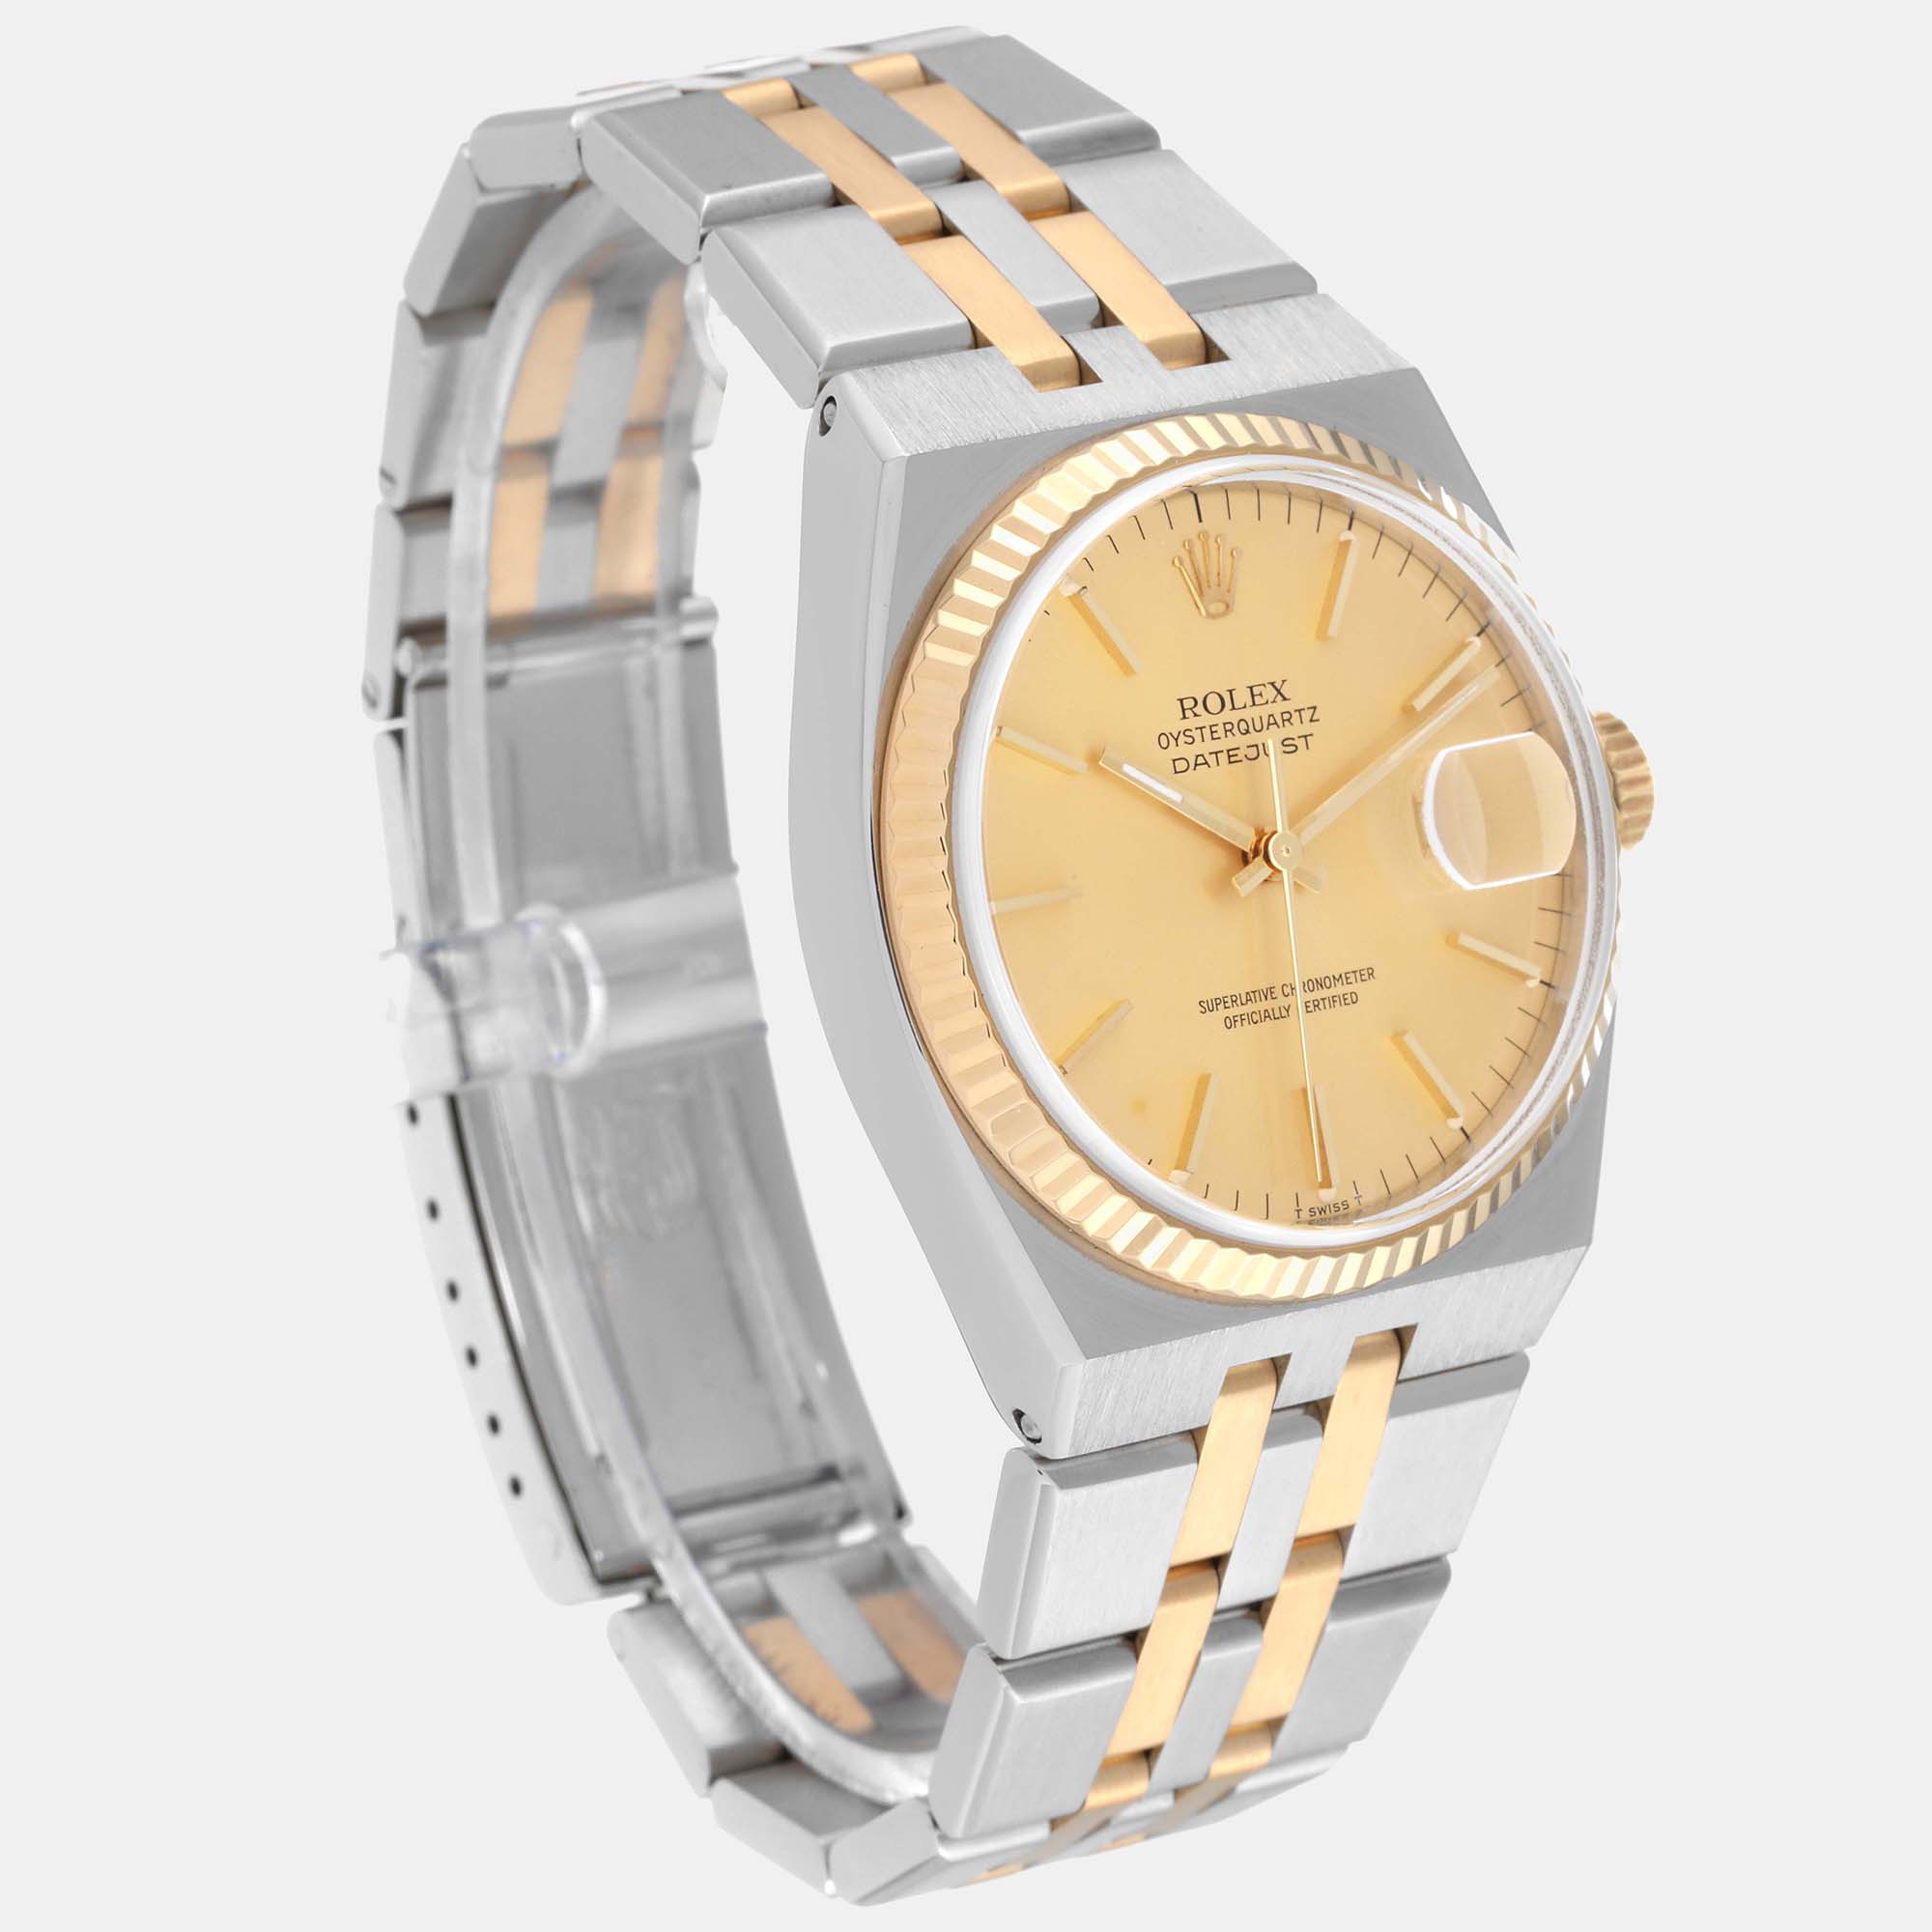 Rolex Oysterquartz Datejust Steel Yellow Gold Mens Watch 17013 36 Mm